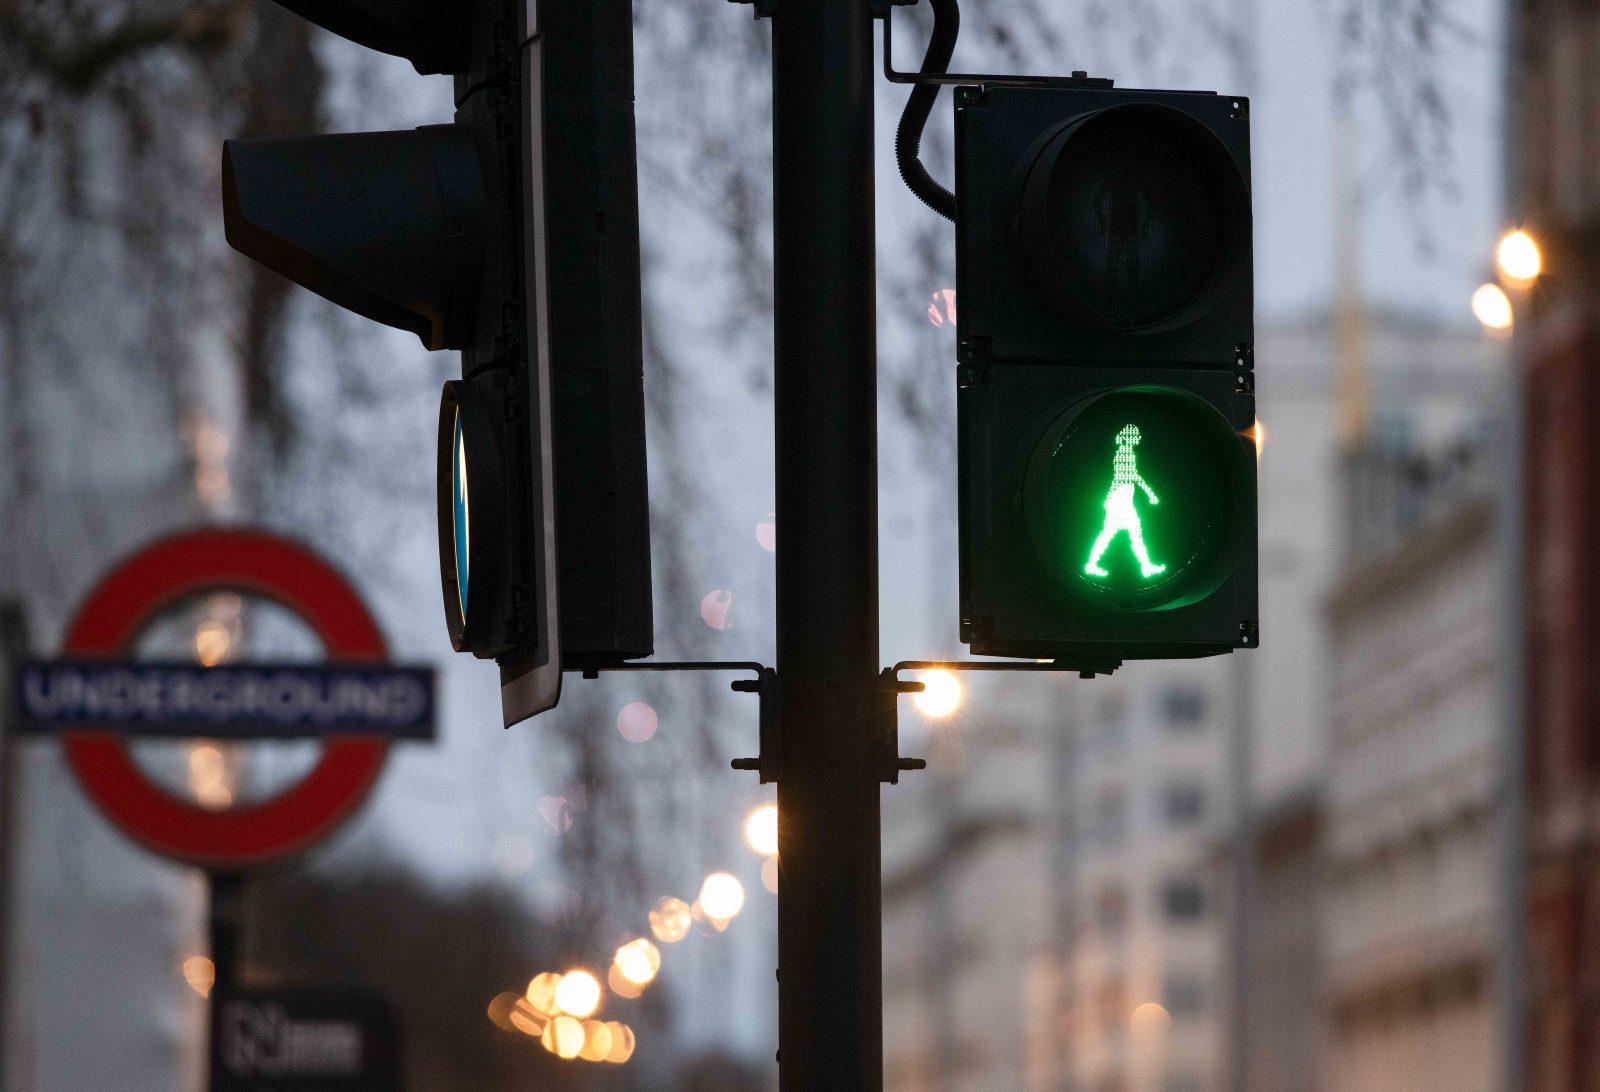 Day: gives green light to traffic-light women